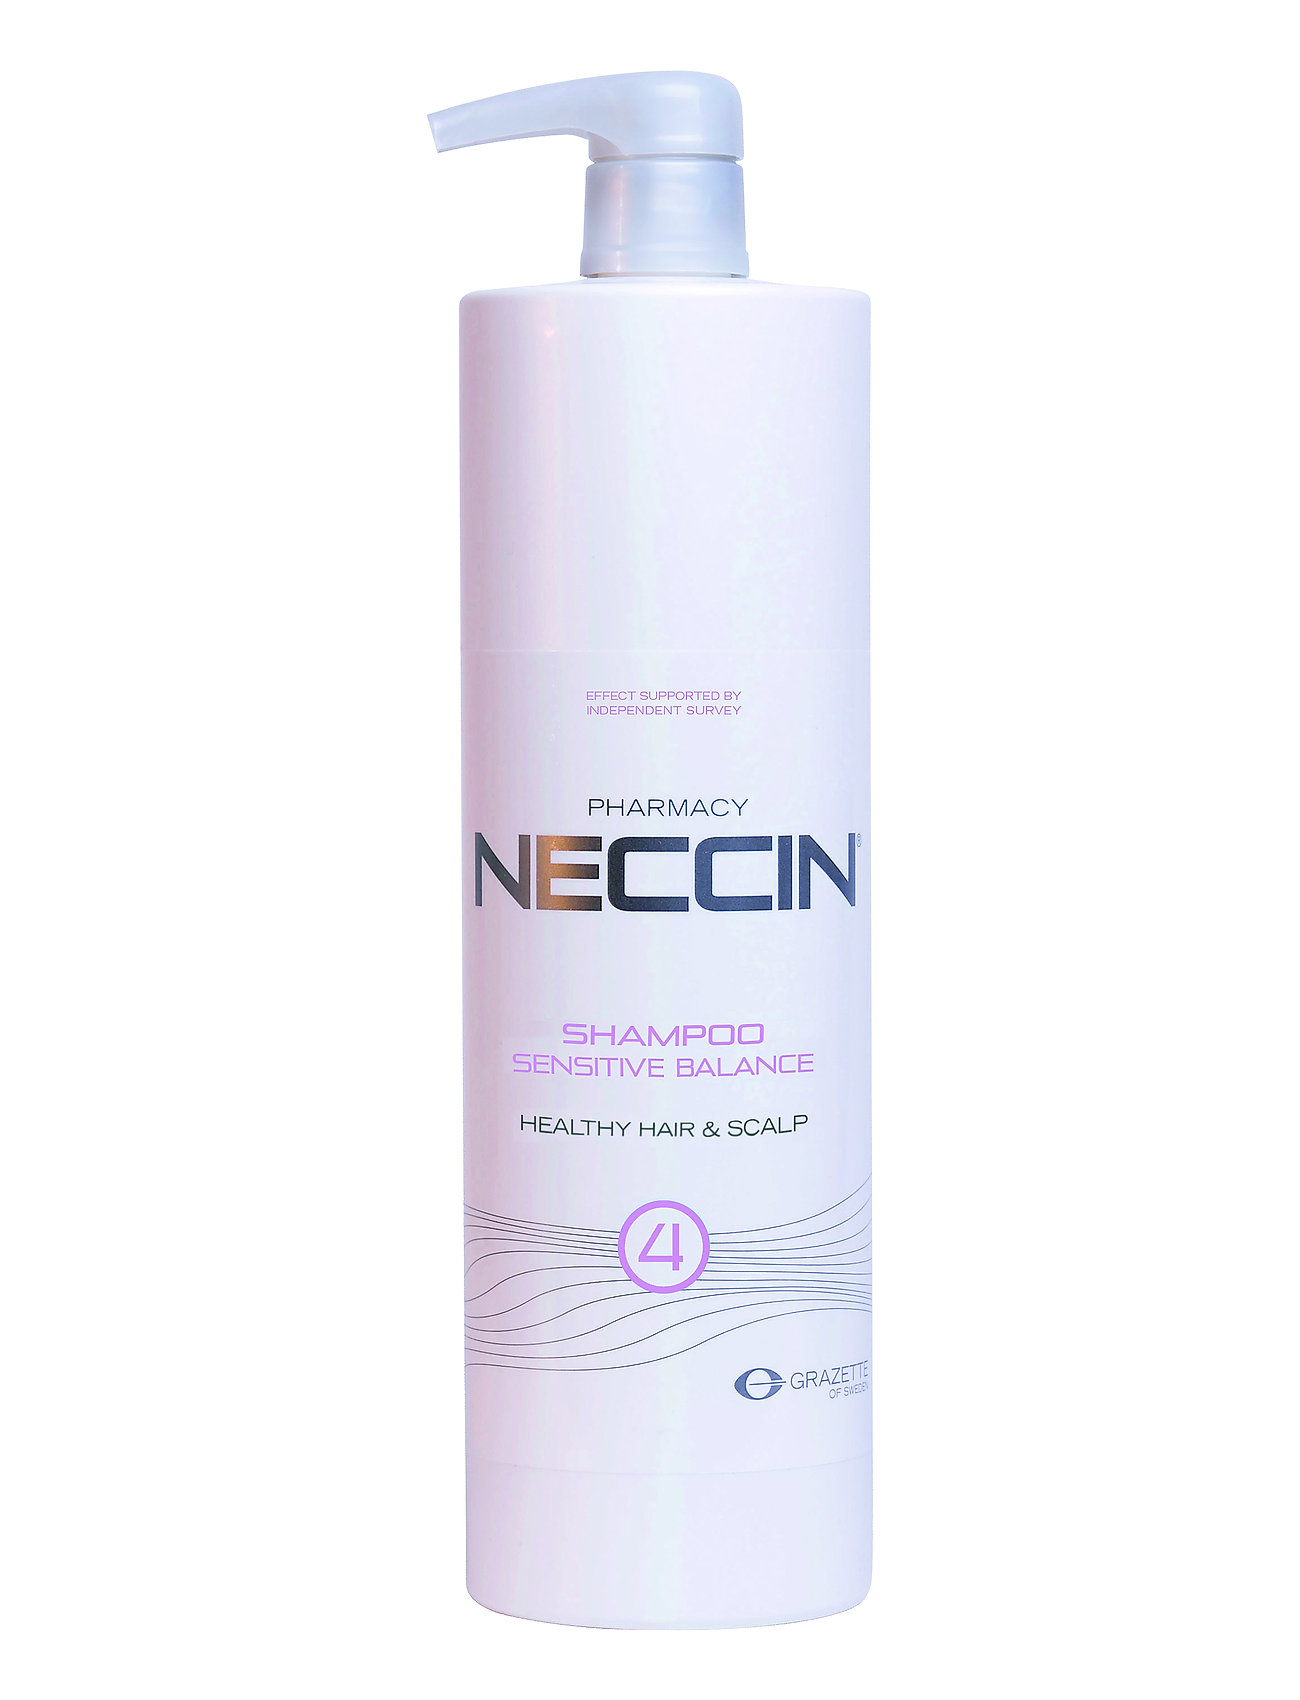 Neccin "Neccin 4 Sensitive Balance Shampoo Nude Neccin"